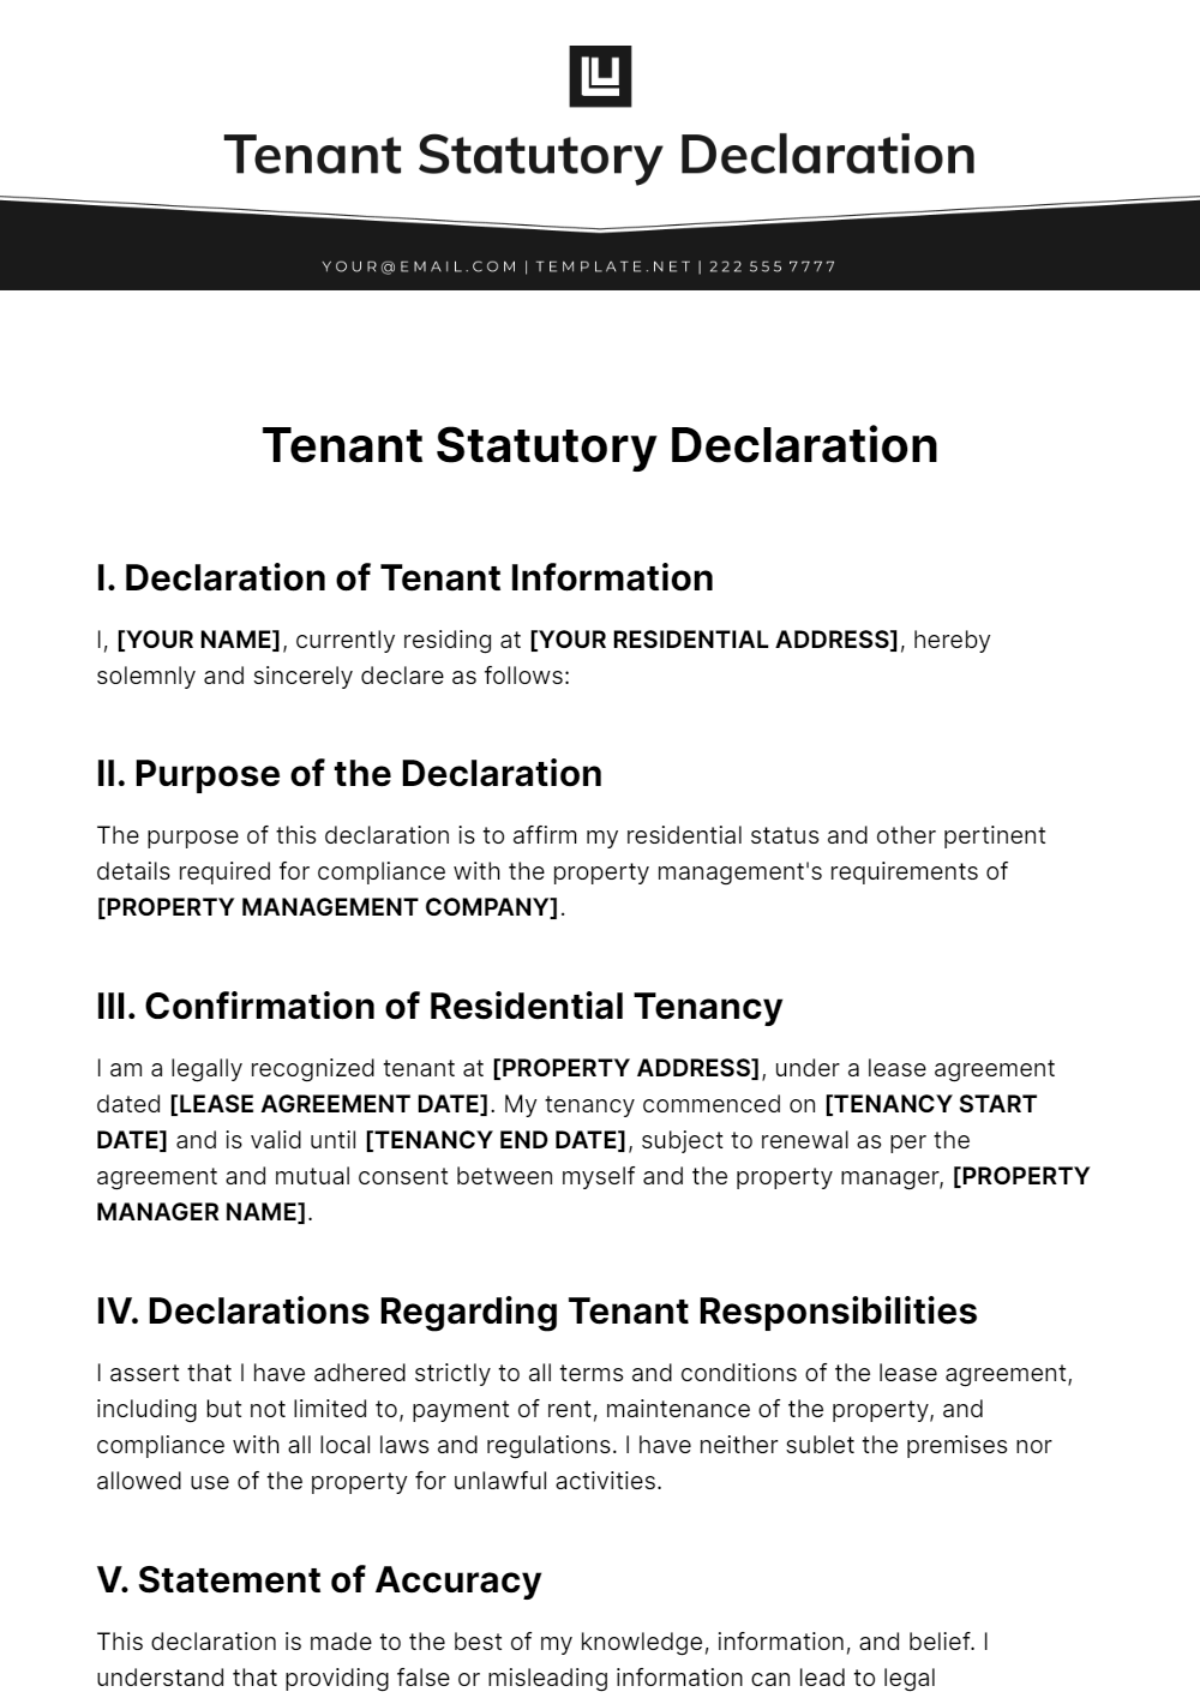 Tenant Statutory Declaration Template